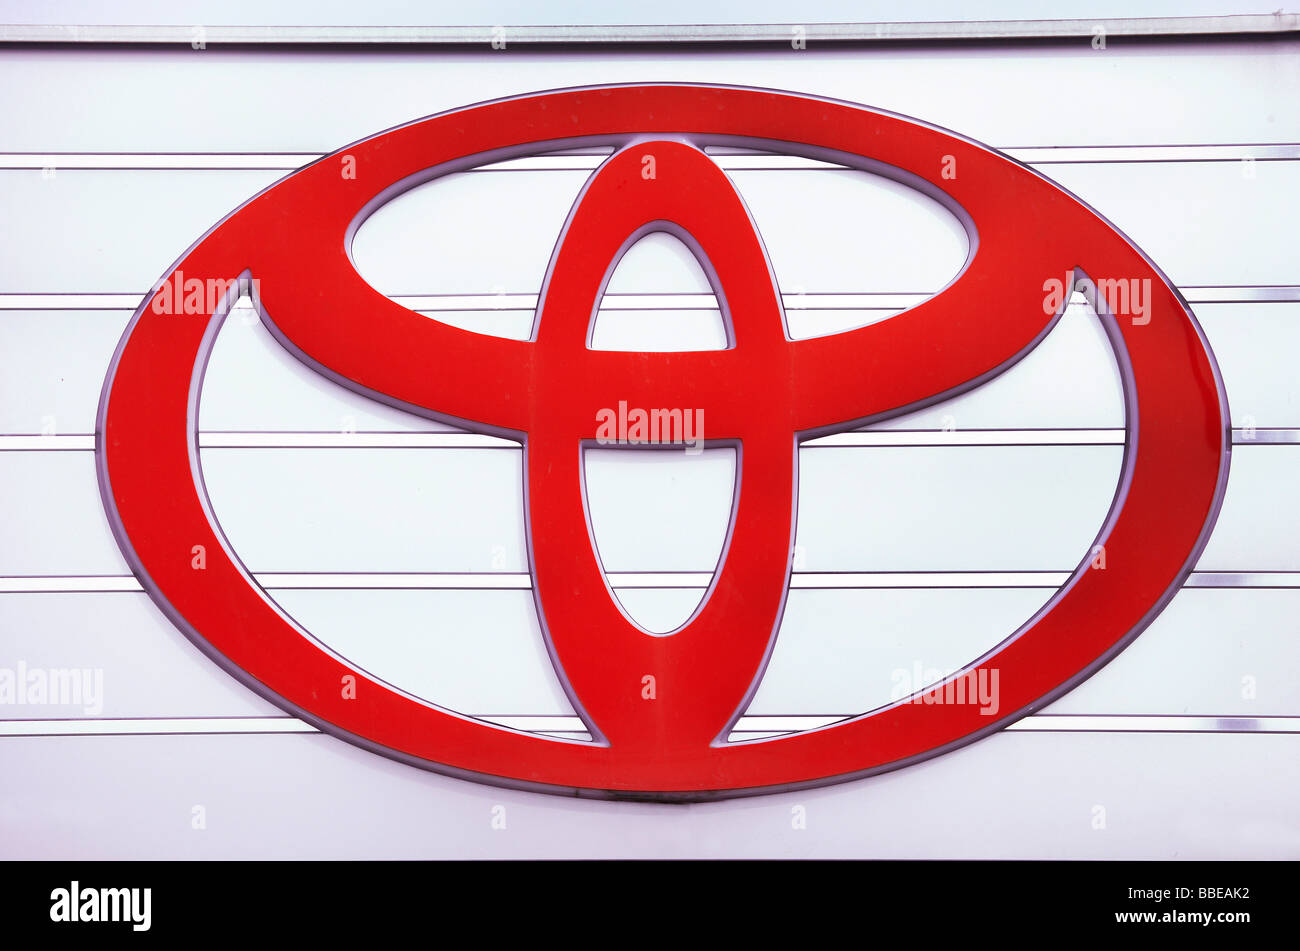 Company logo of the Toyota Motor Corporation Stock Photo - Alamy